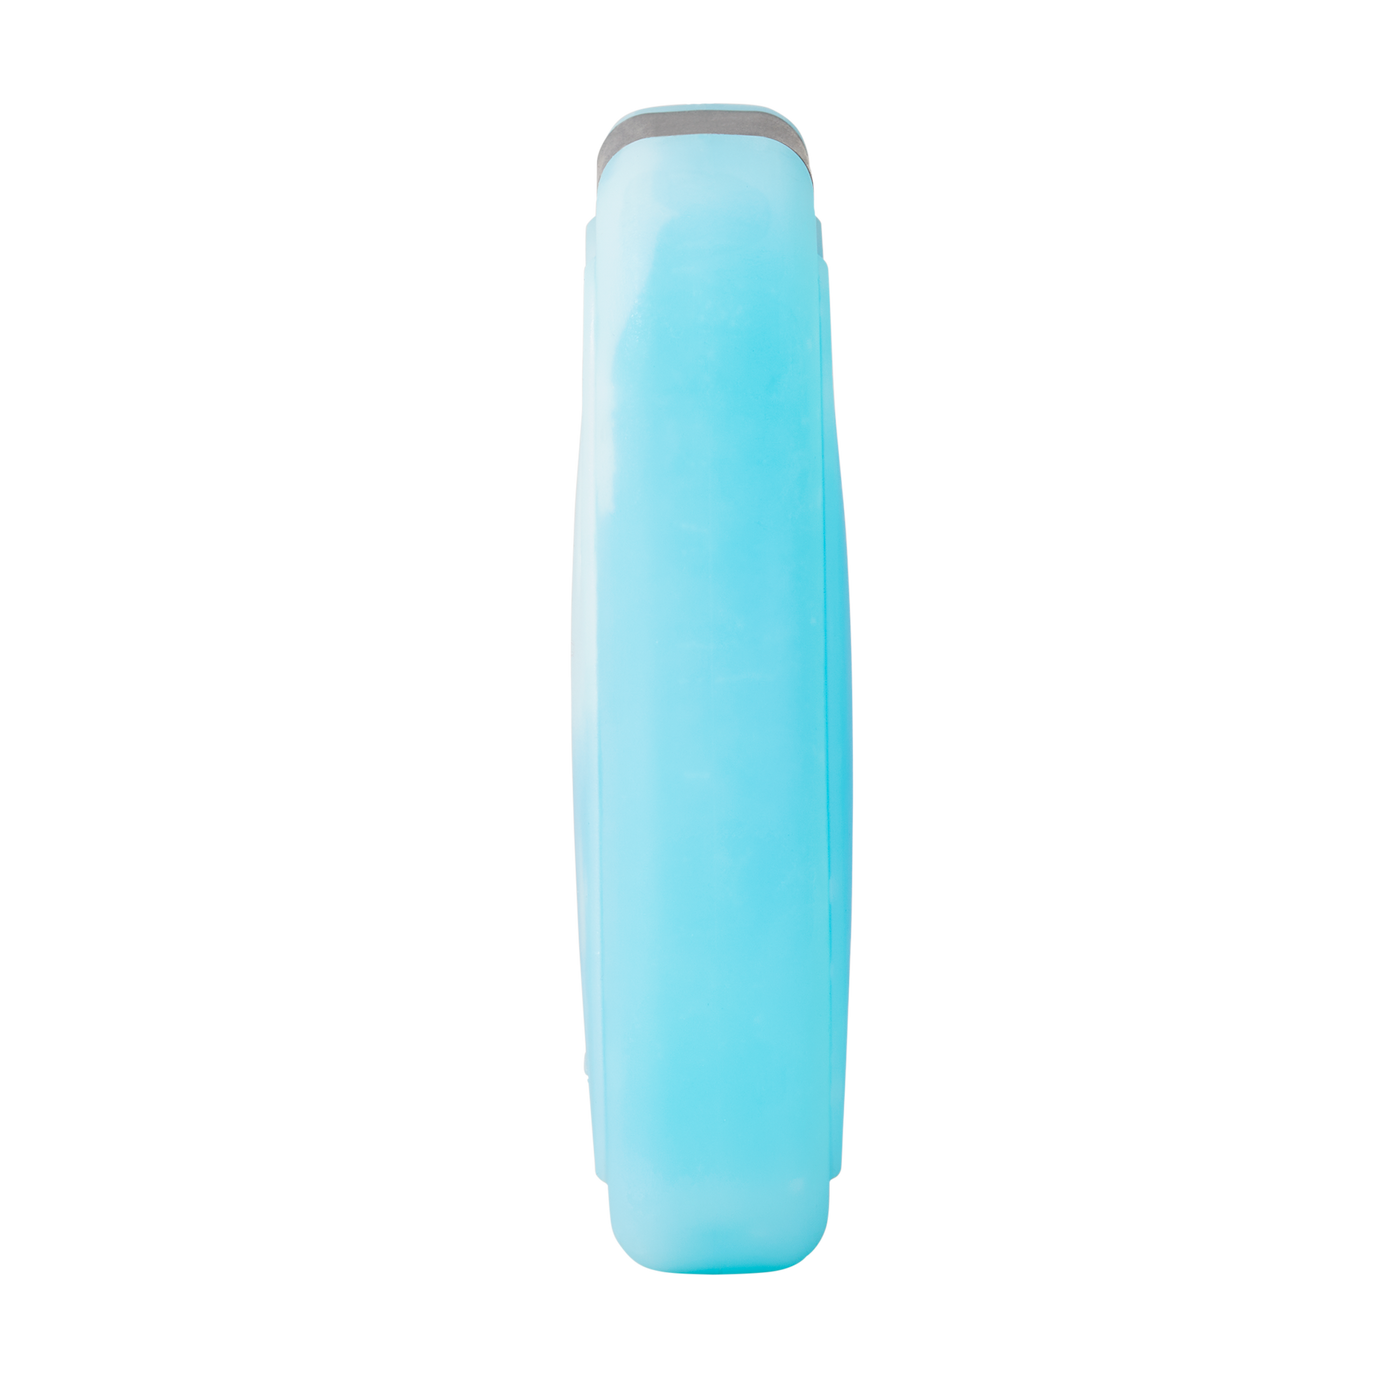 Yeti Thin Ice Small Ice Pack (0.5lb)